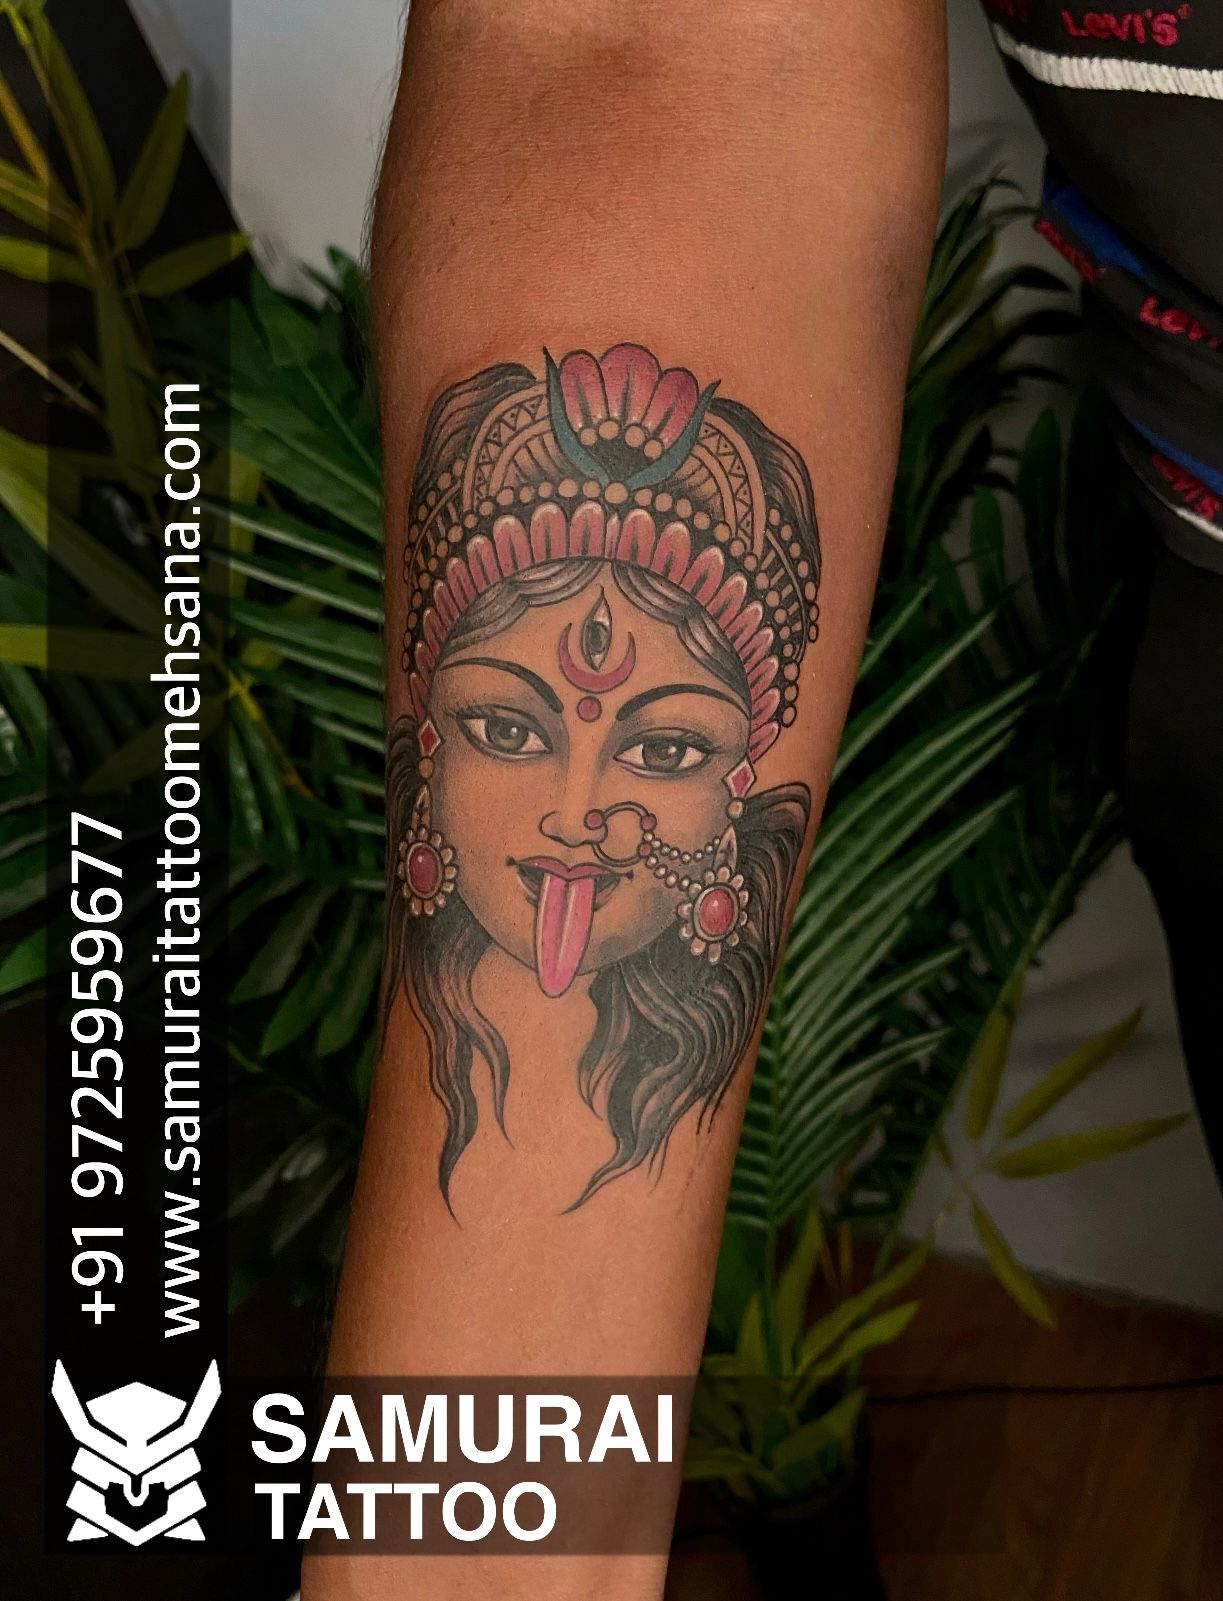 Kali tattoos meanings tattoo designs ideas – Artofit